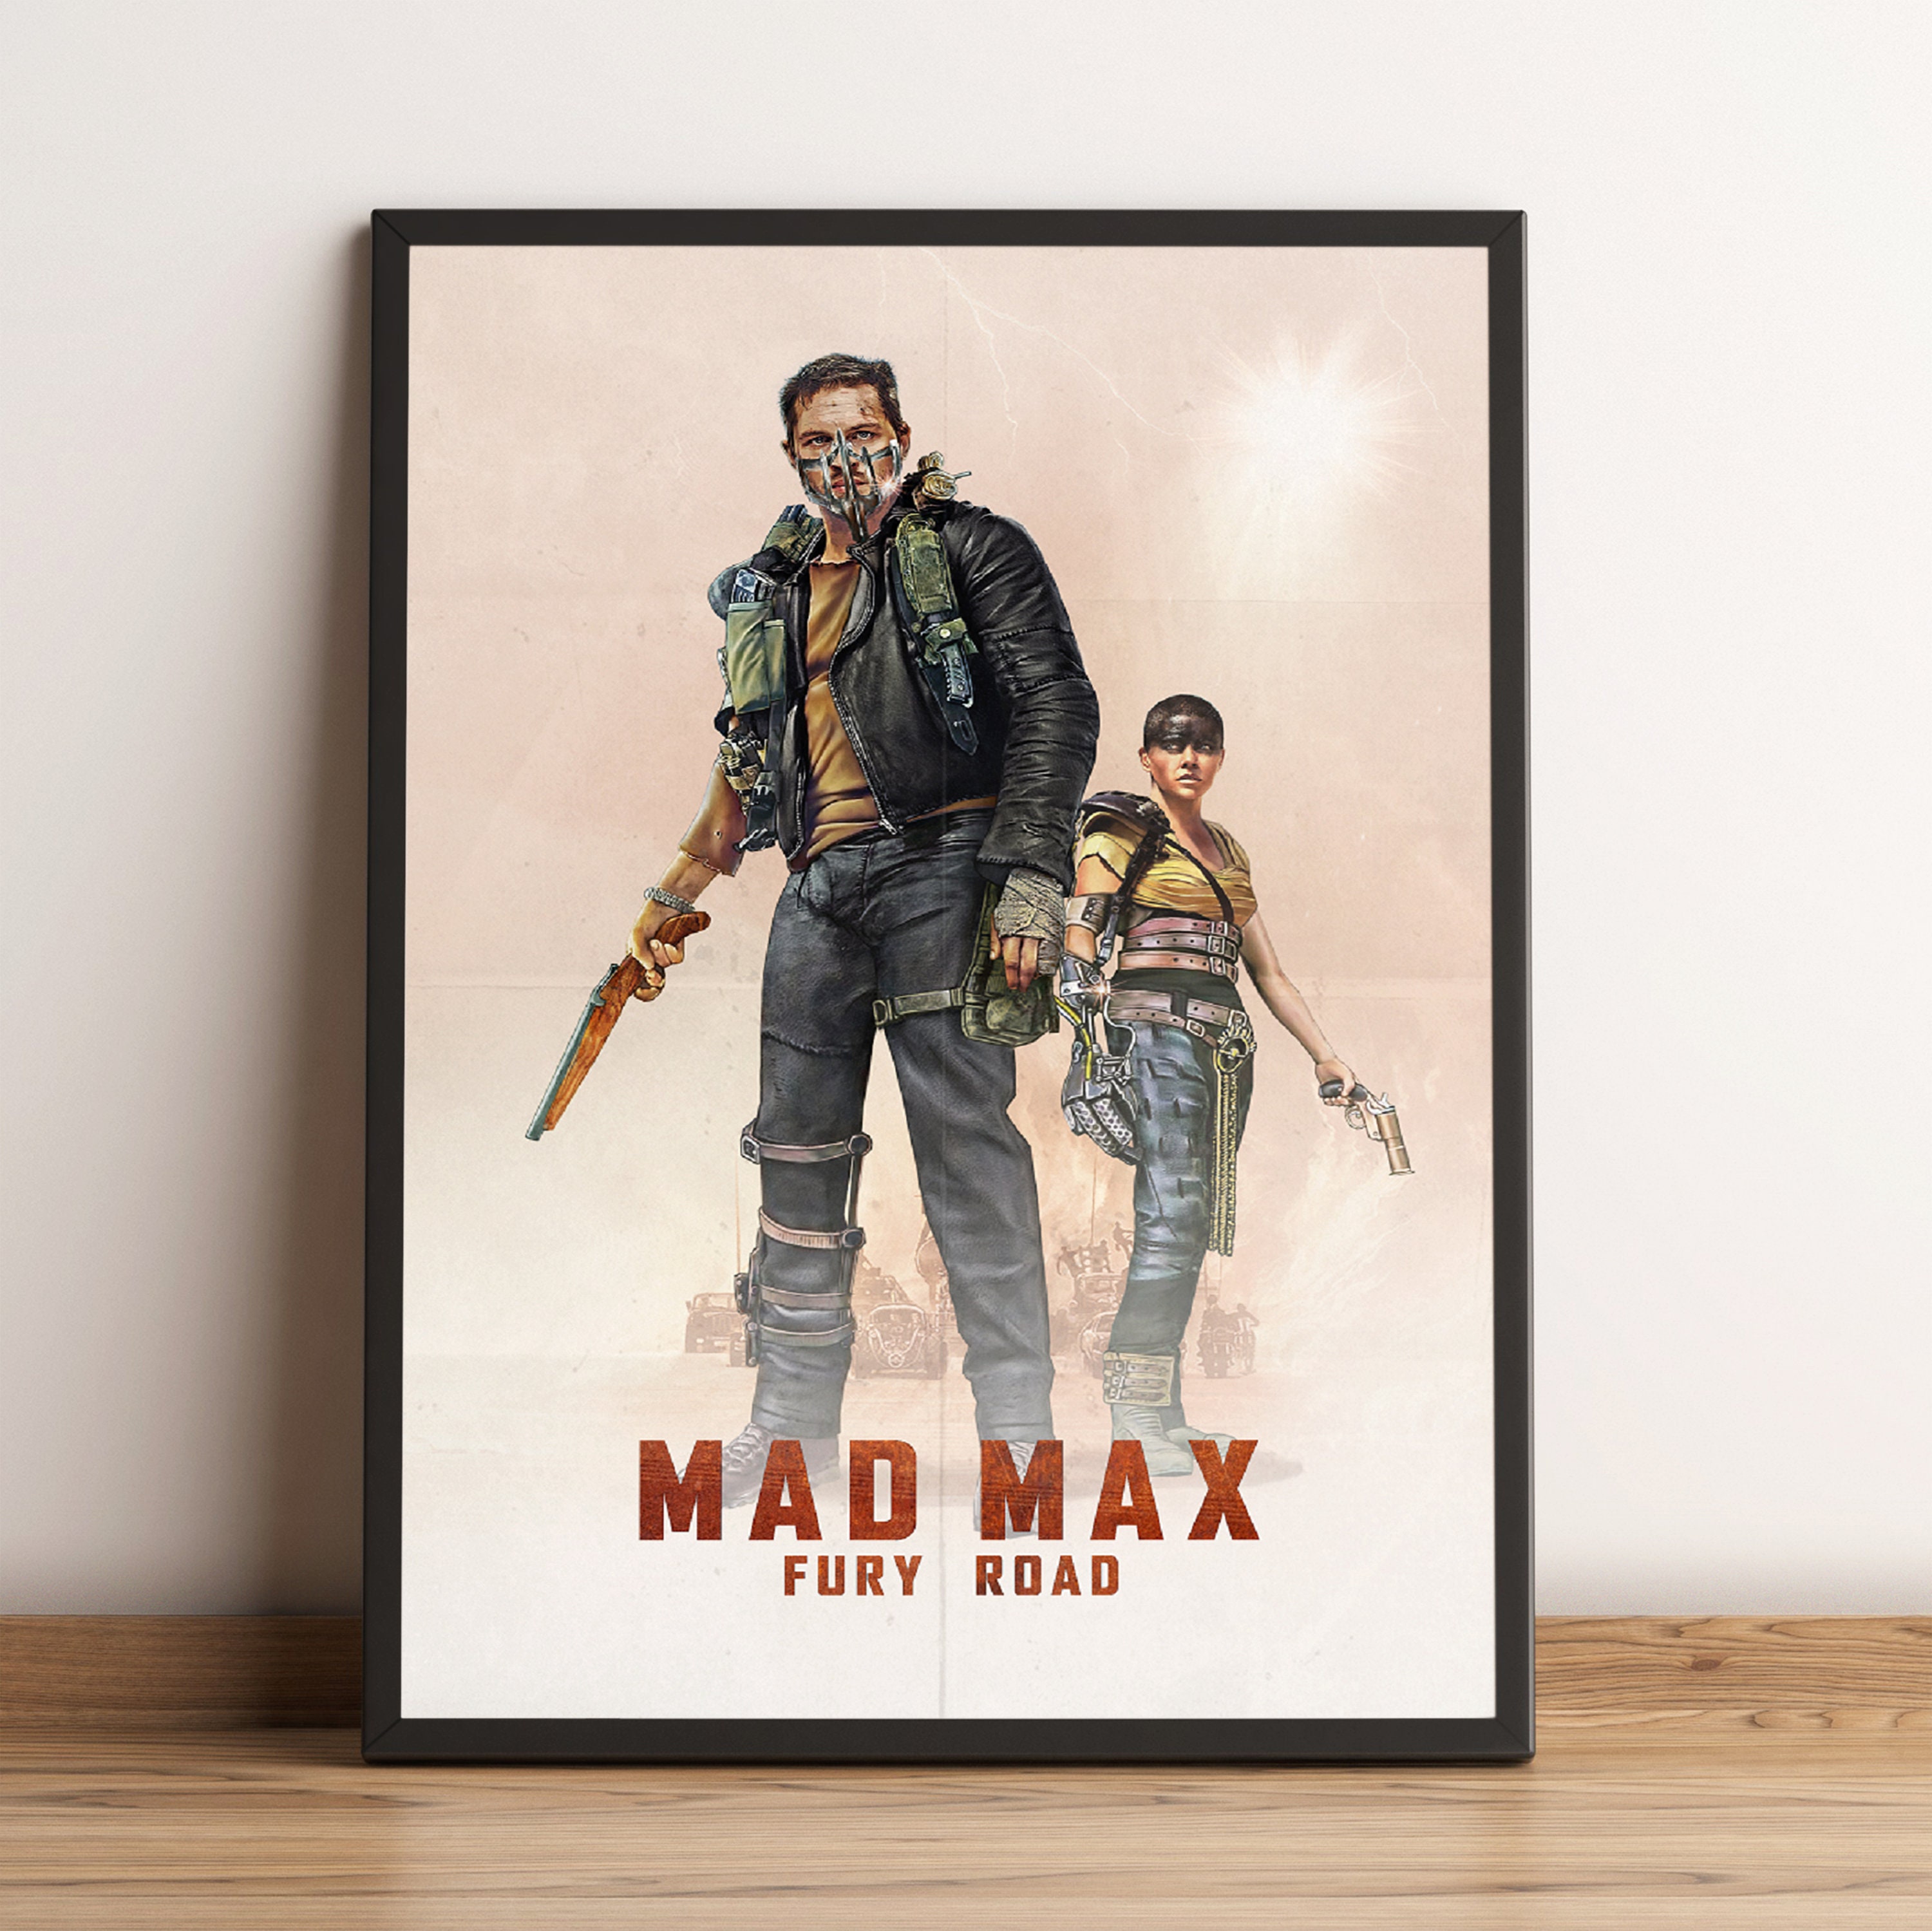 Great Max 2 costume!!! \m/  Mad max movie, Max rockatansky, Post  apocalyptic costume